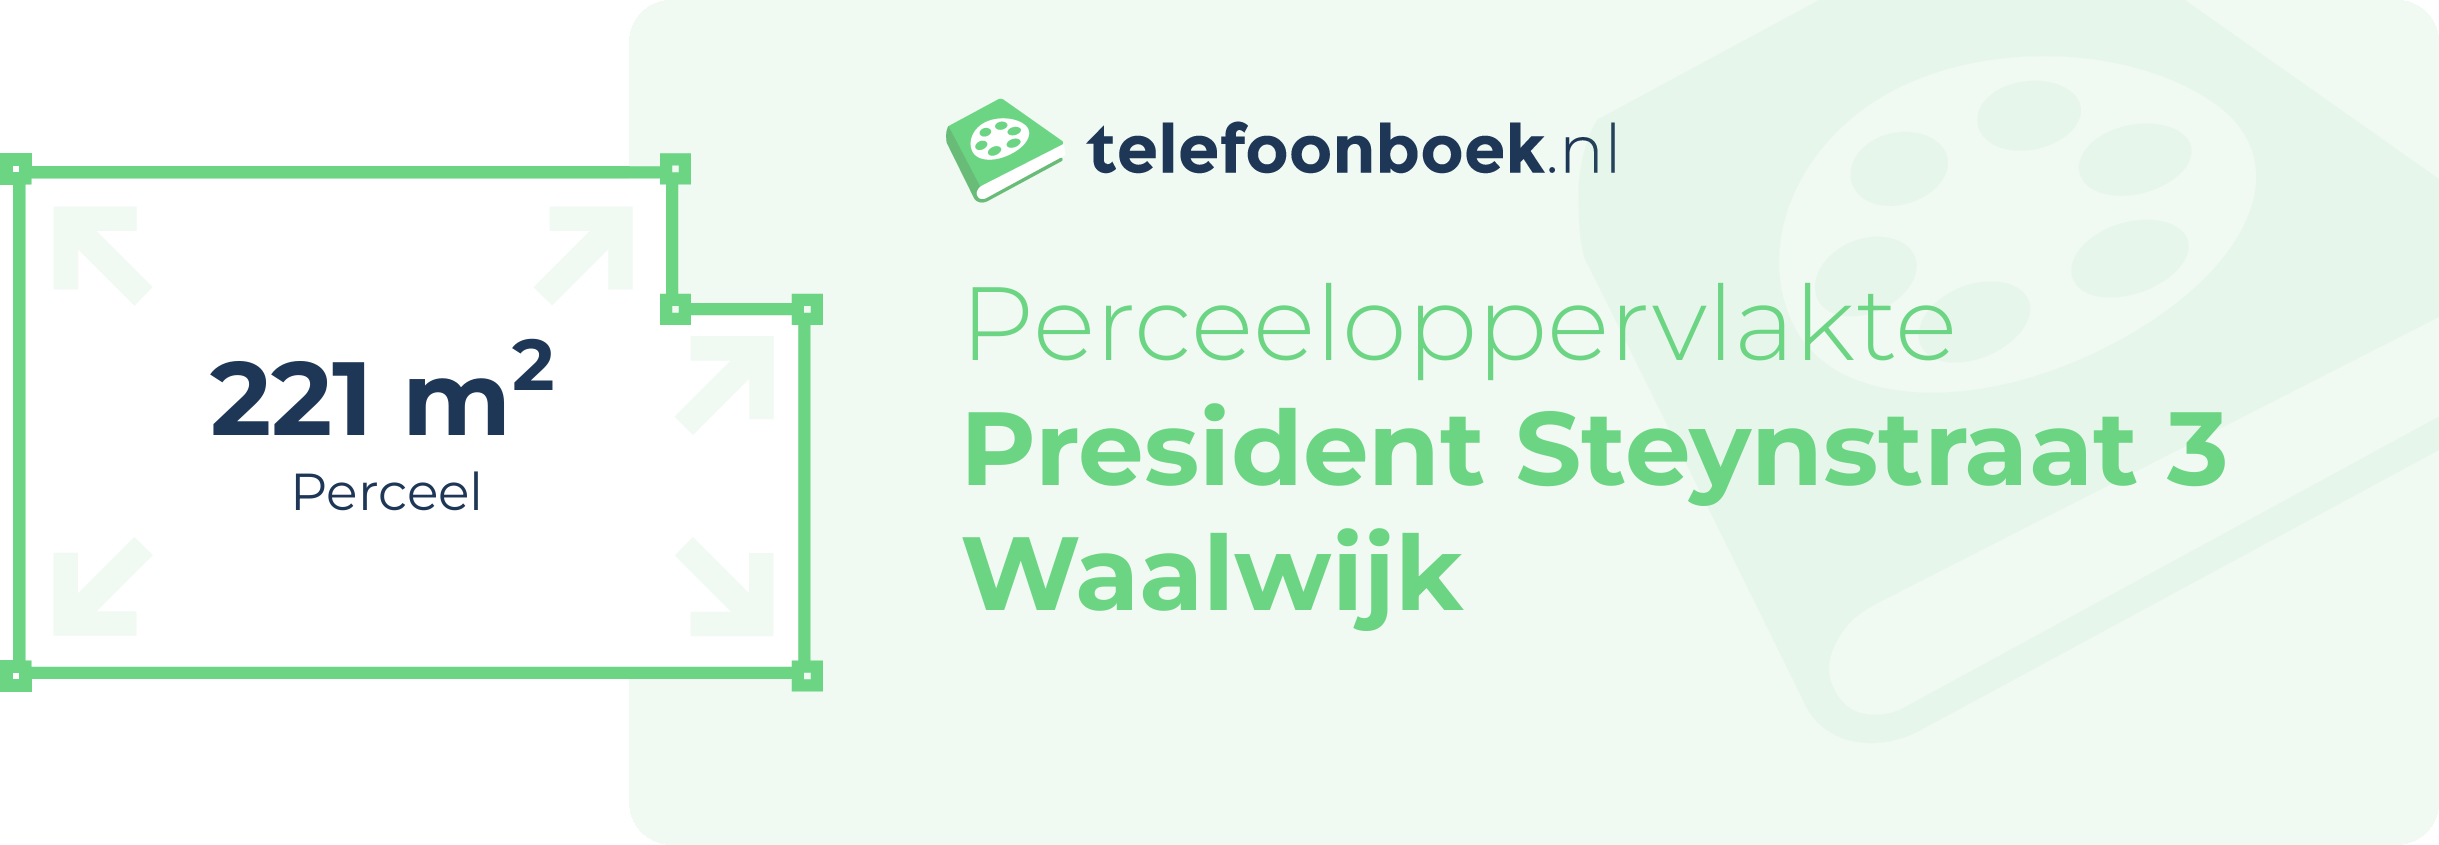 Perceeloppervlakte President Steynstraat 3 Waalwijk